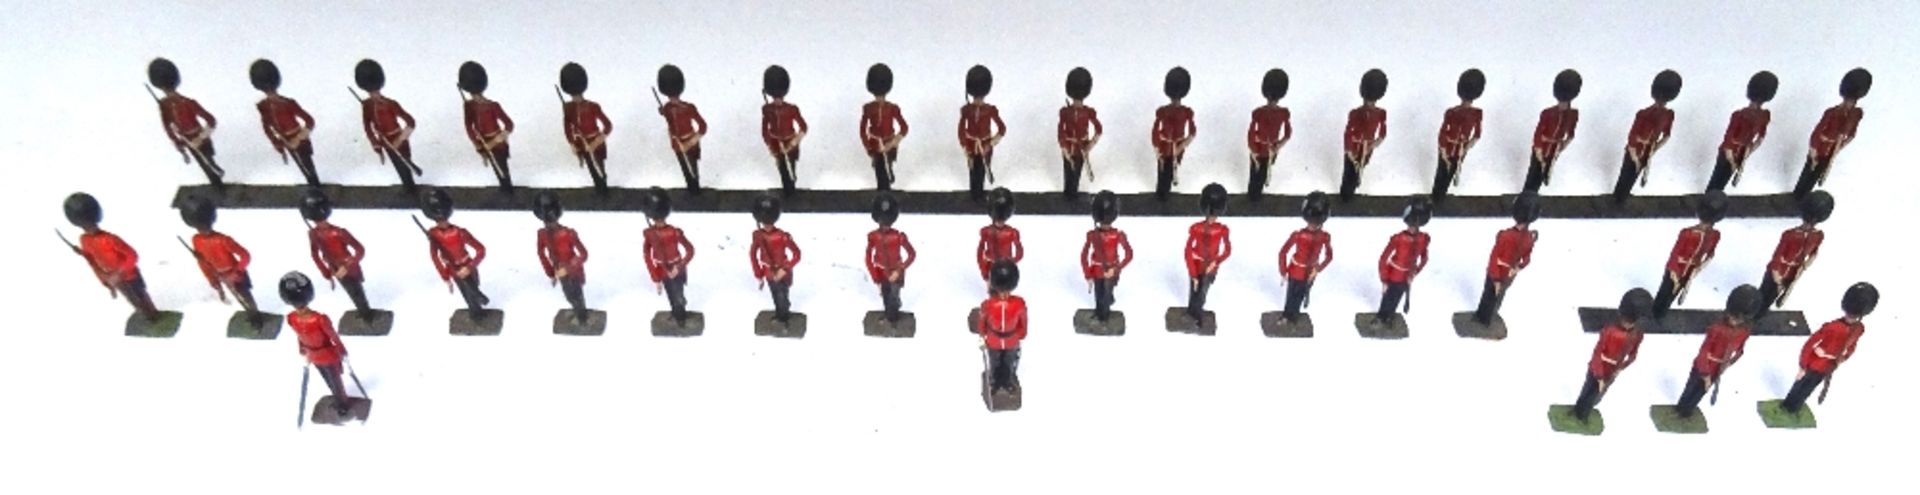 Britains Foot Guards at present